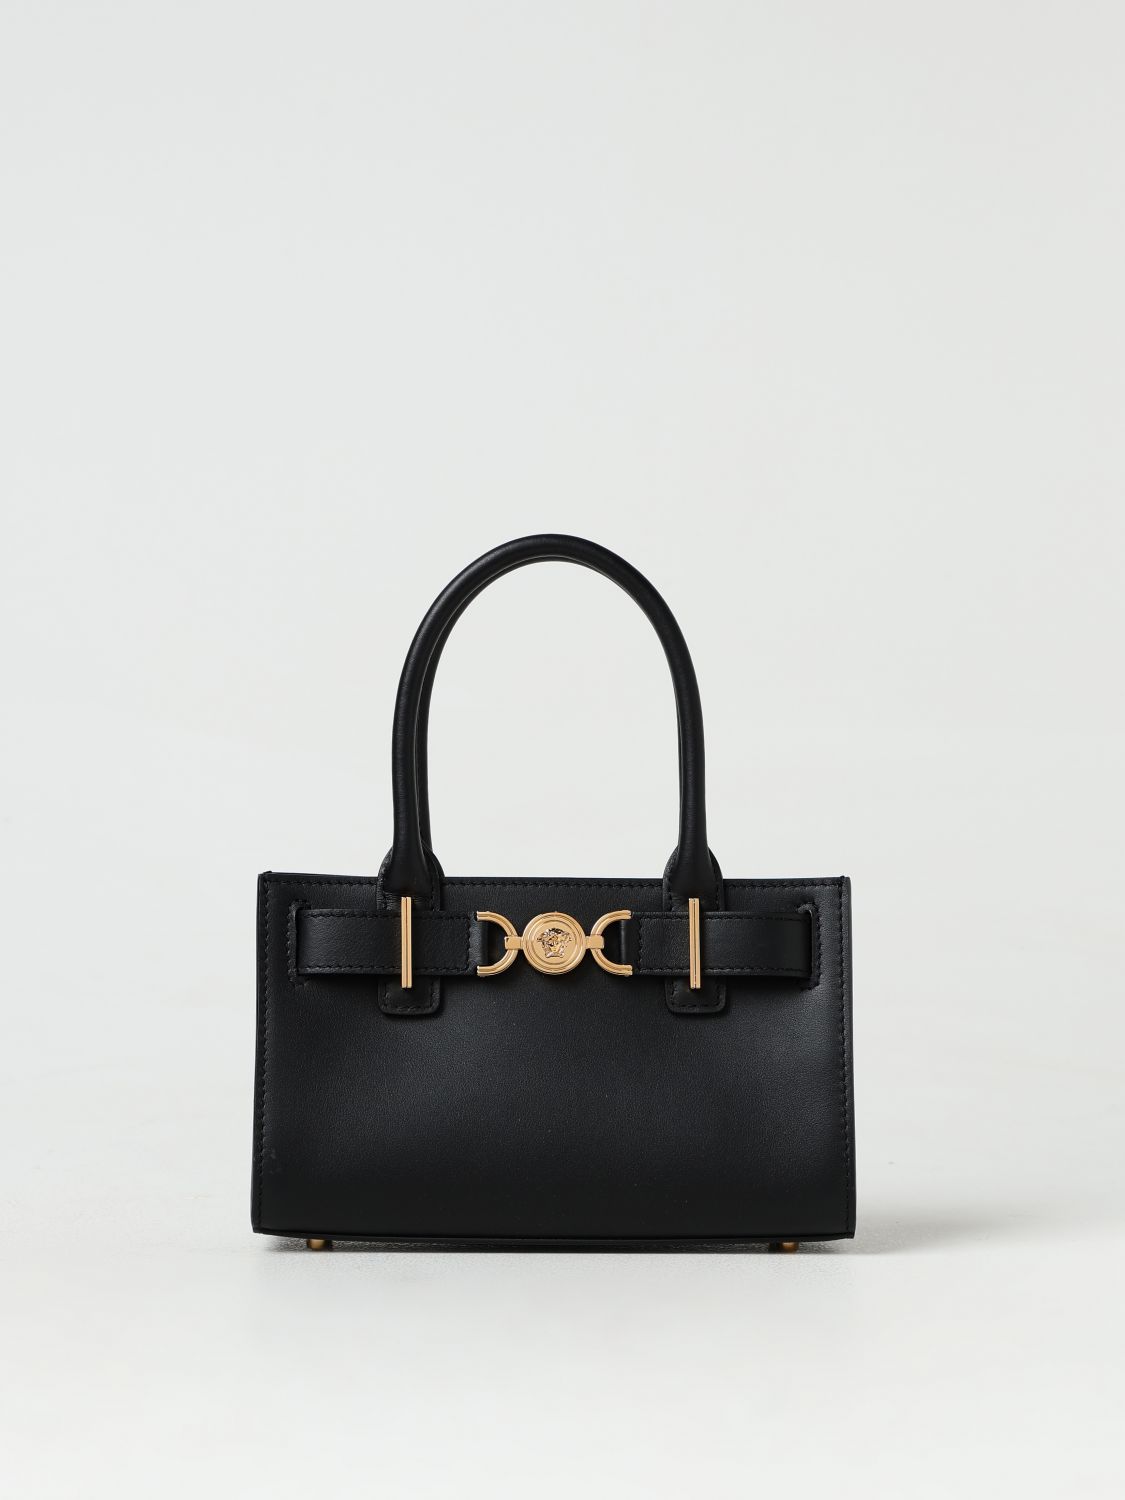 Versace Handbag VERSACE Woman colour Black